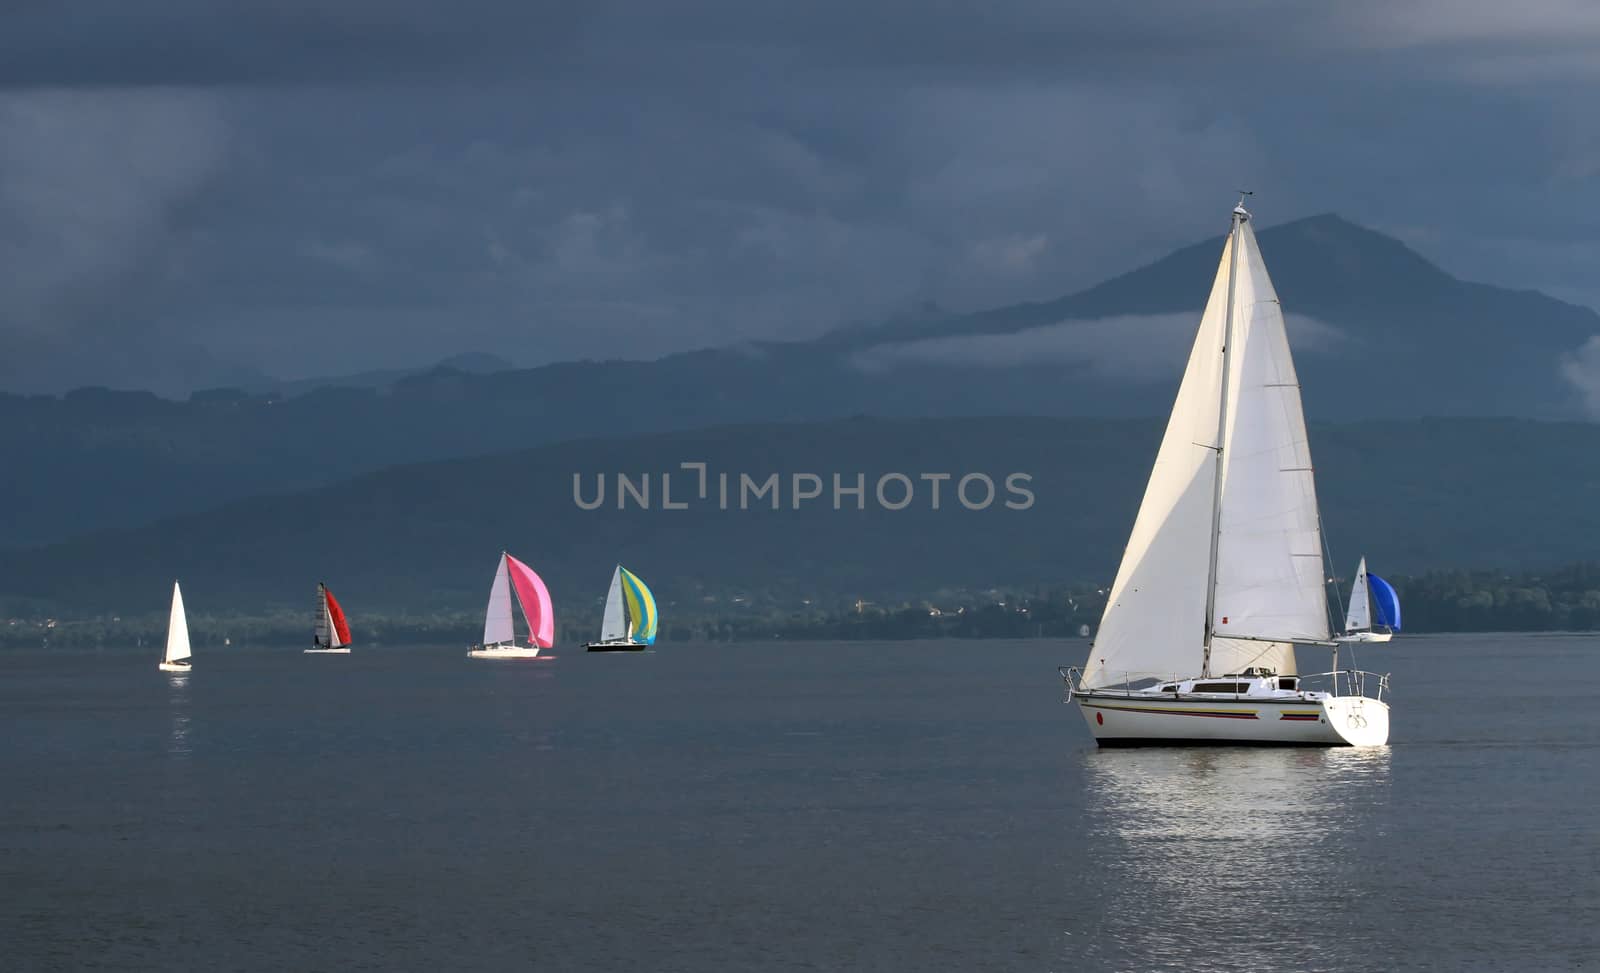 Colorful sailing boats by stormy weather, Geneva lake, Switzerland